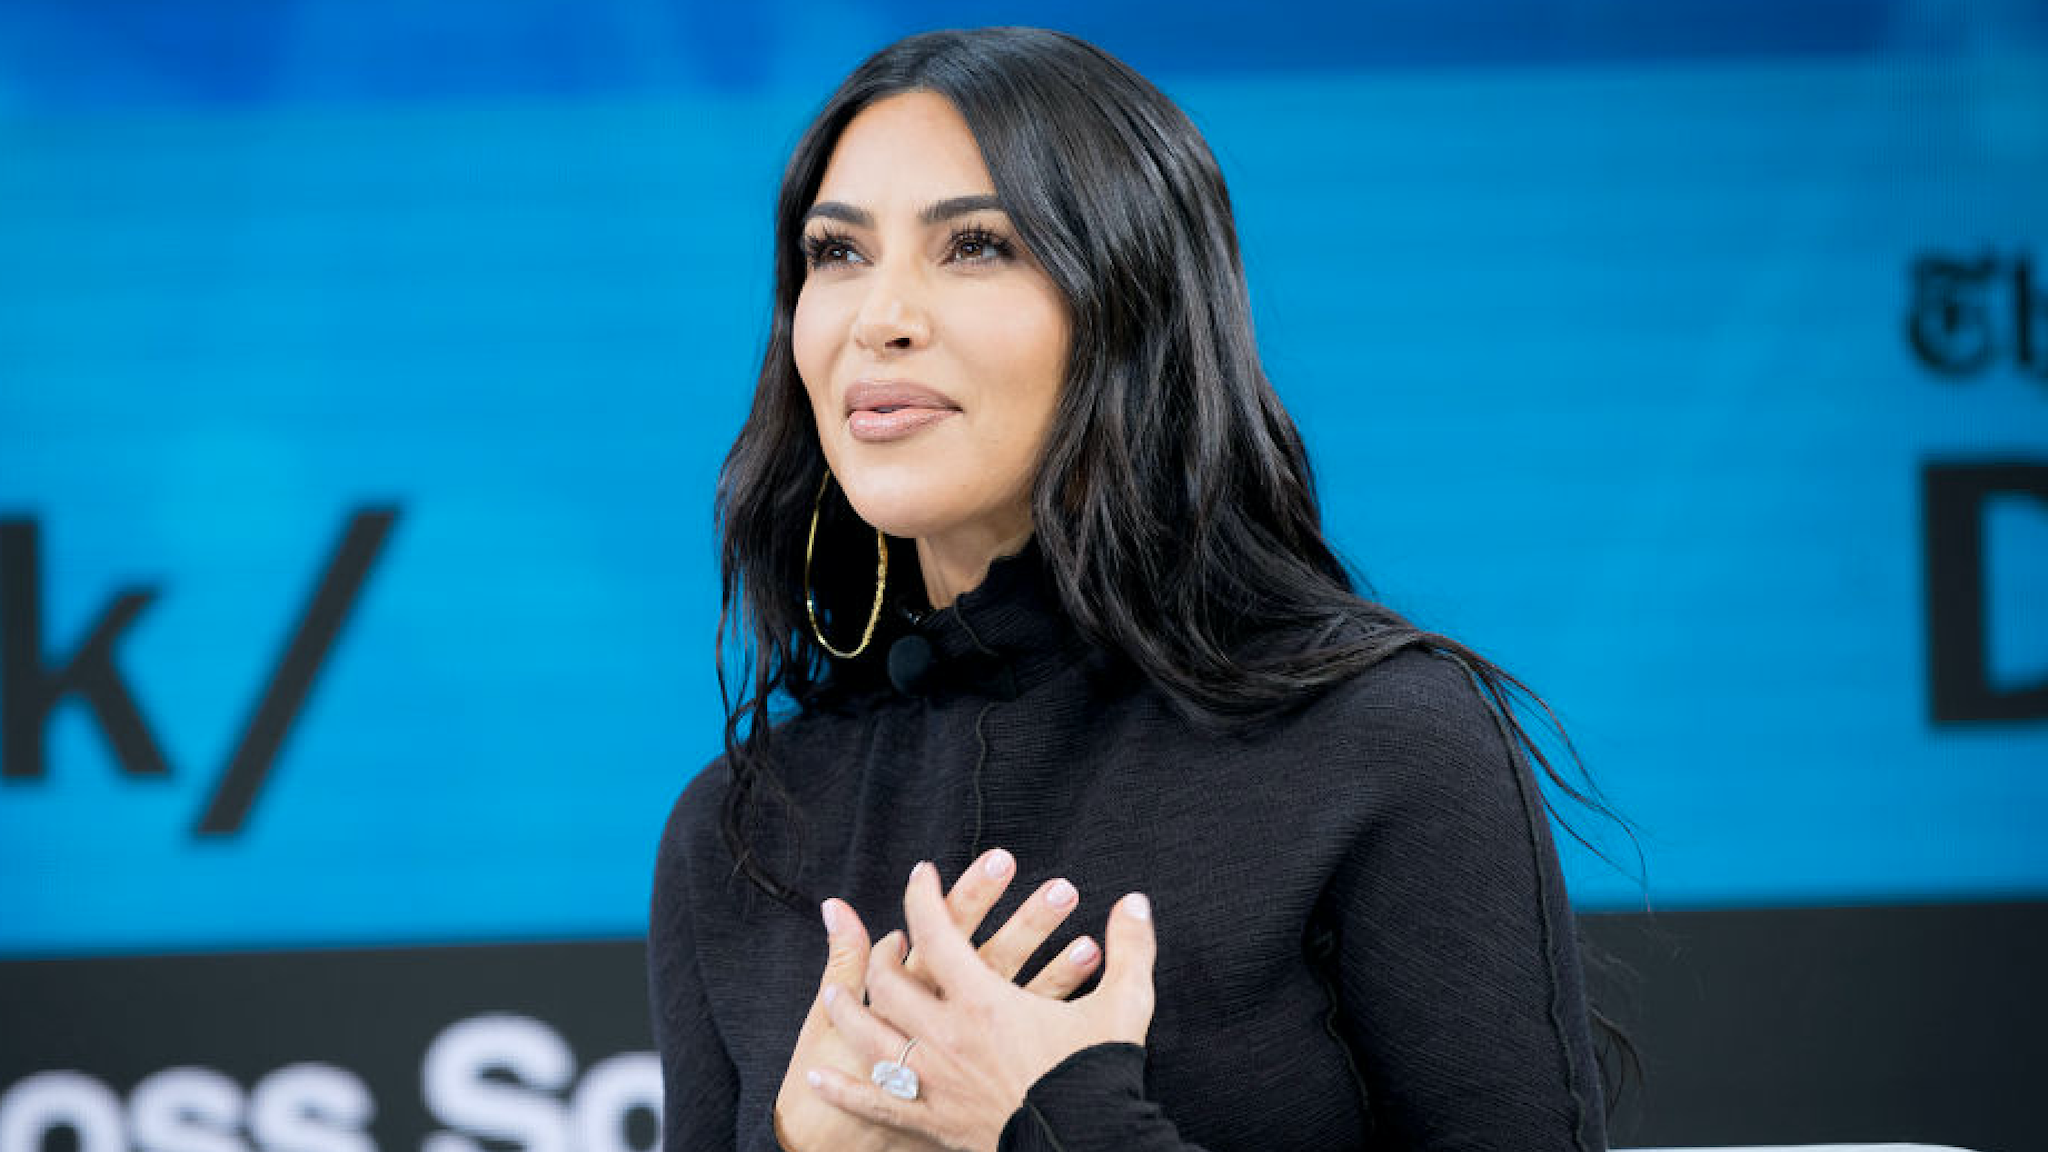 Kim Kardashian West speaks onstage at 2019 New York Times Dealbook on November 06, 2019 in New York City.